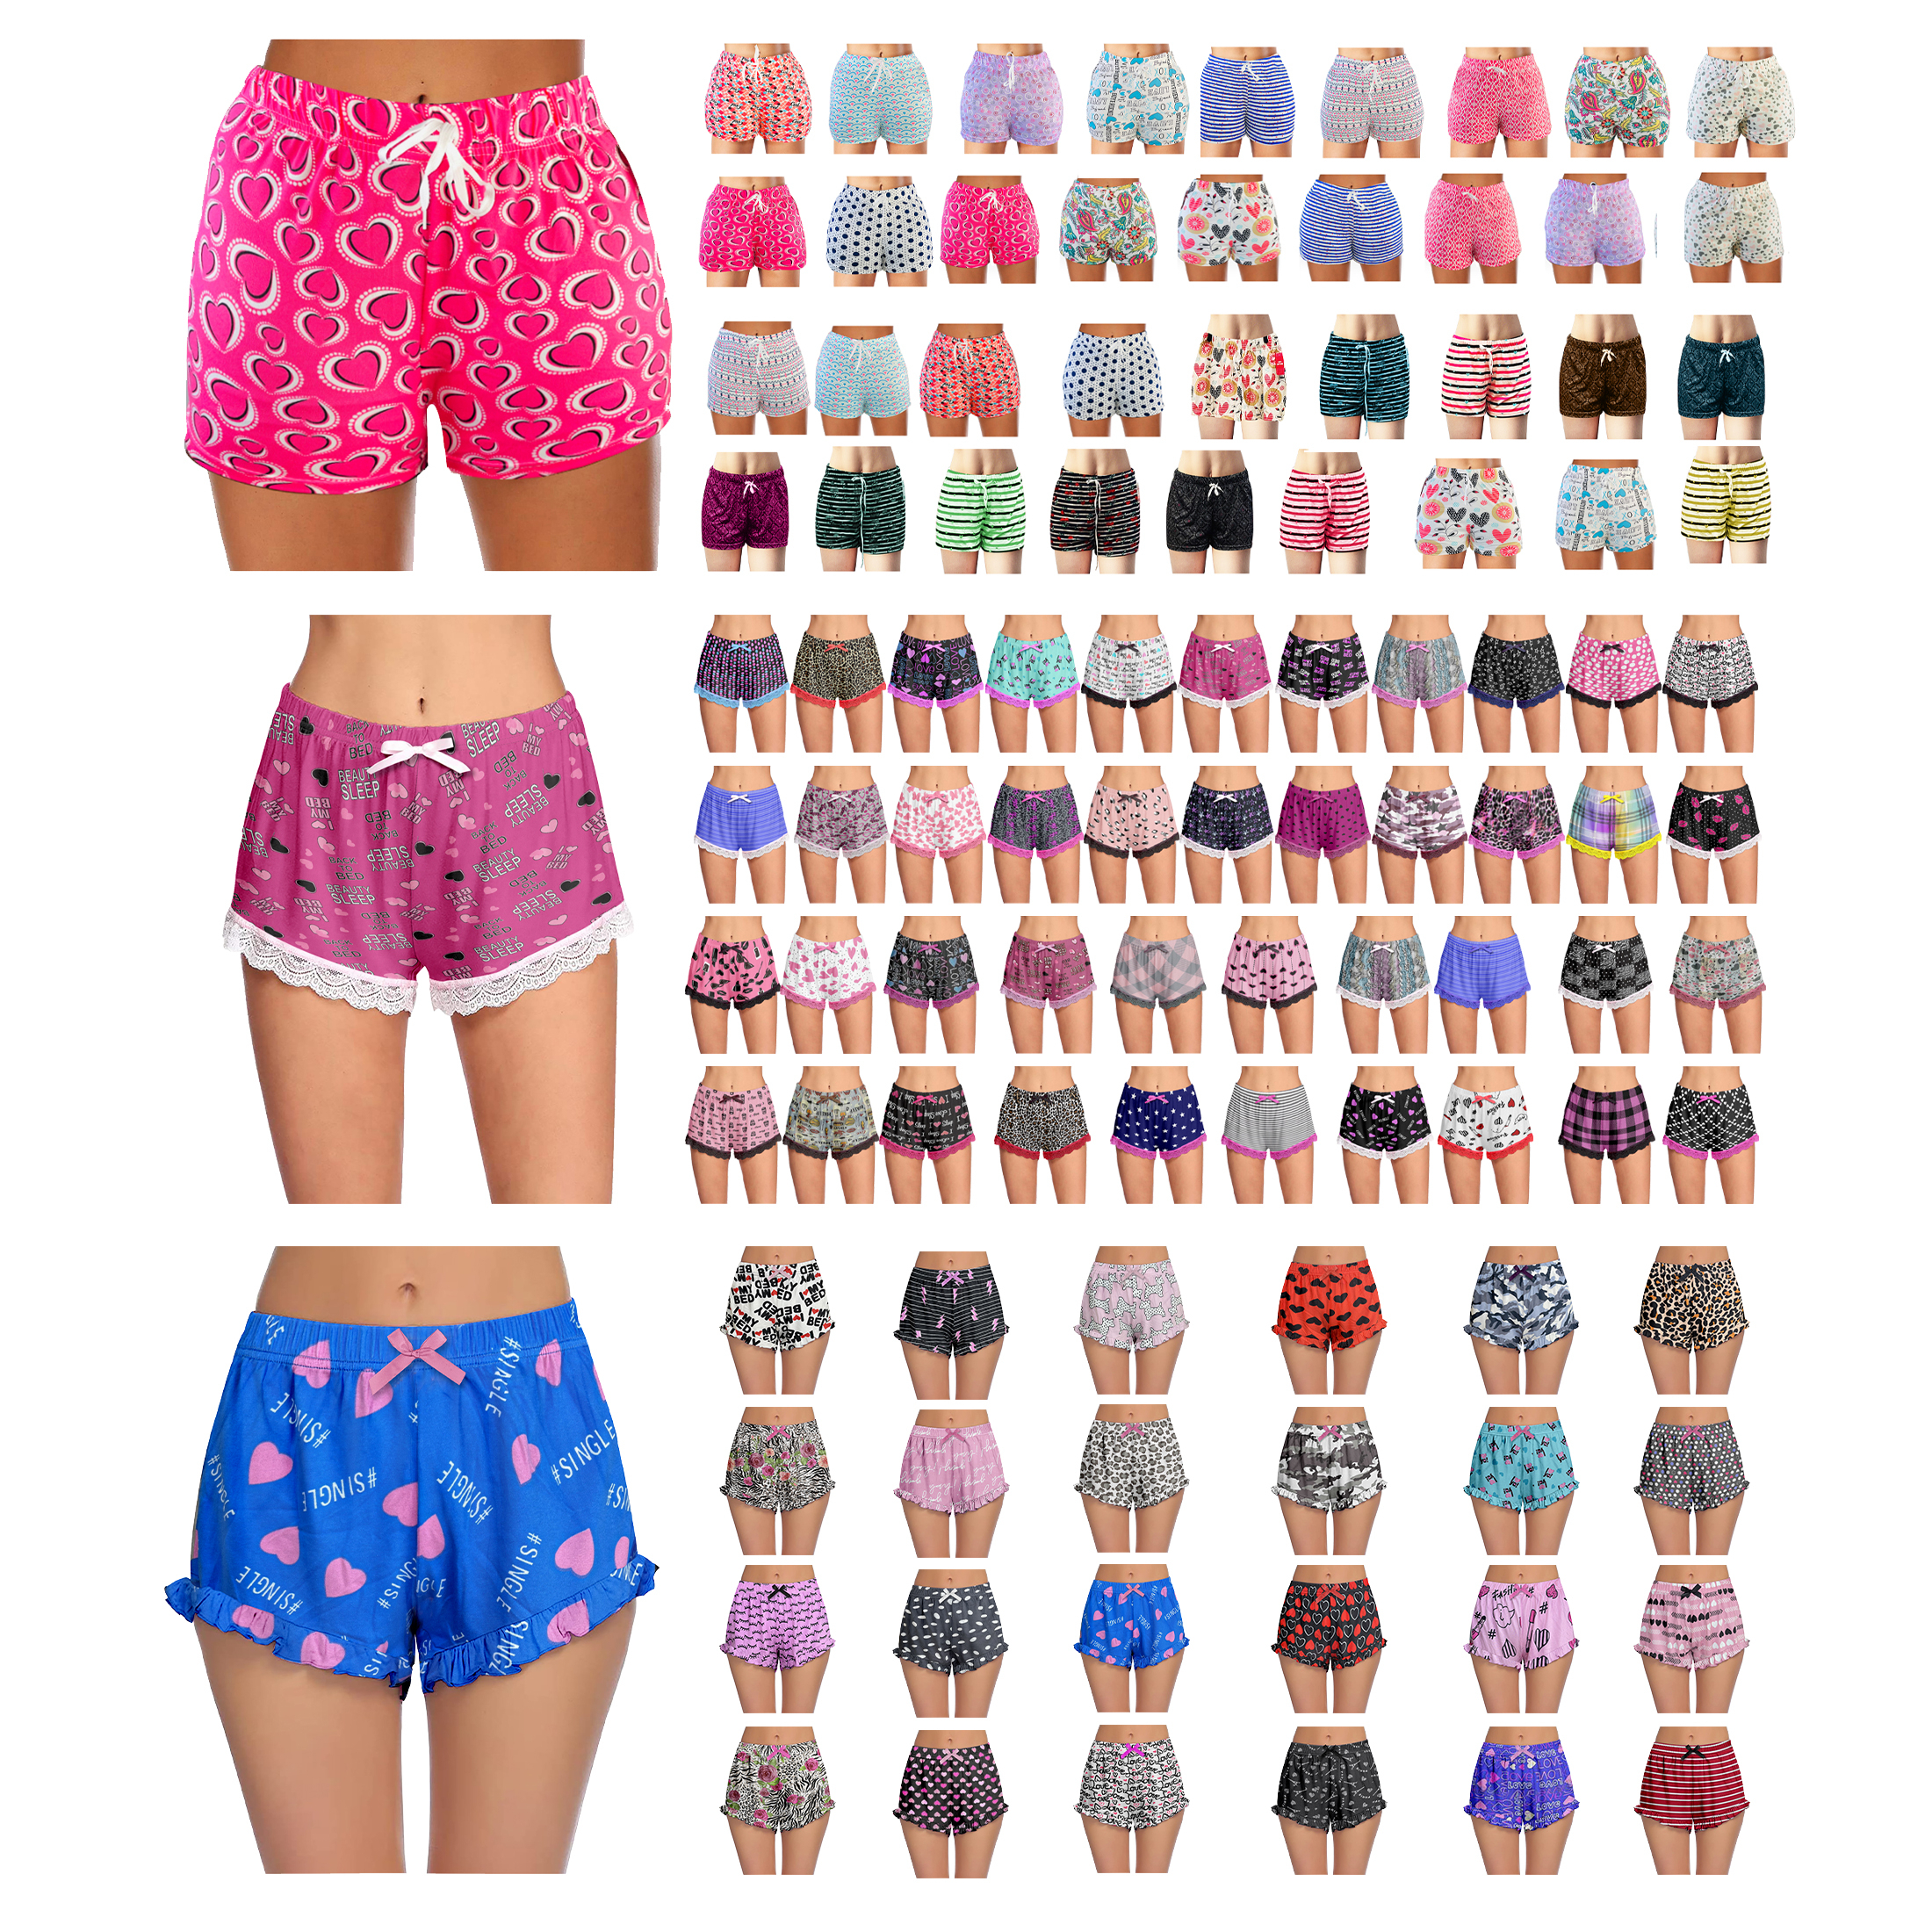 3-Pack: Women's Soft Comfy Printed Lounge Sleep Pajama Shorts - Laced Hem, X-Large